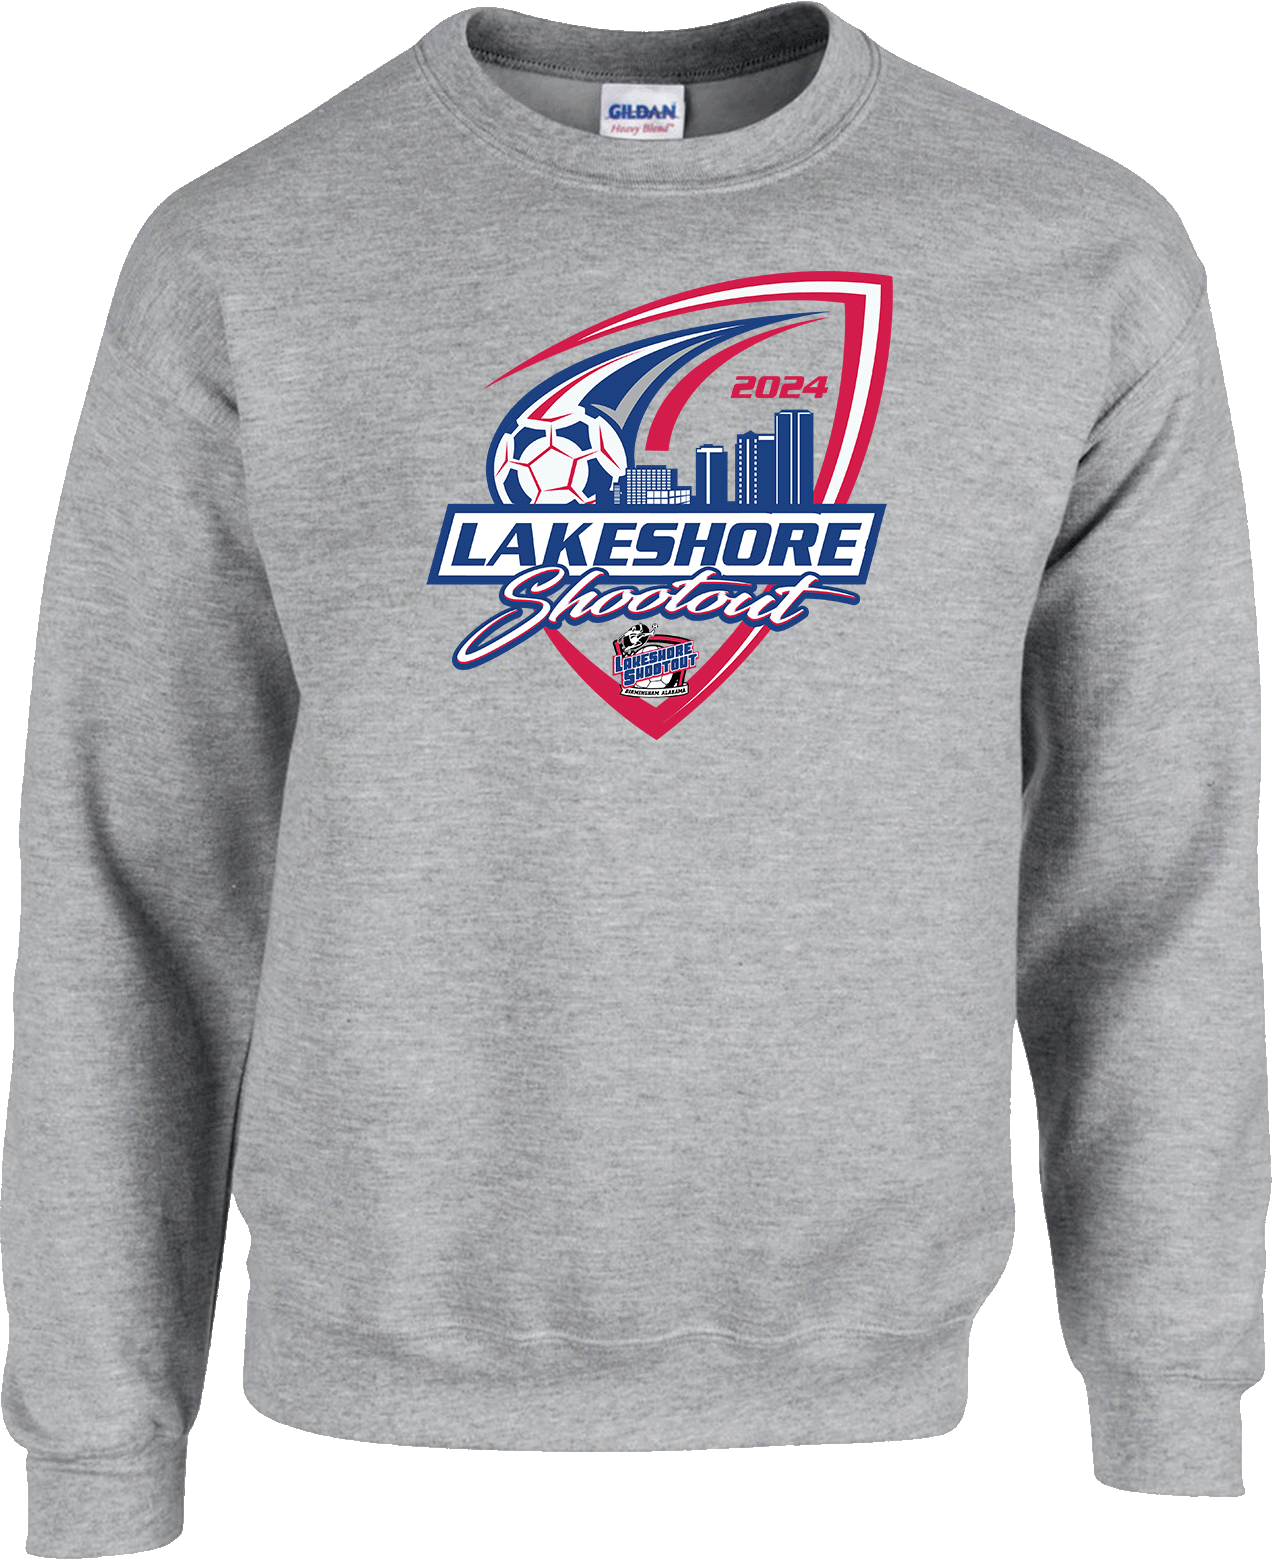 Crew Sweatershirt - 2024 Lakeshore Shootout